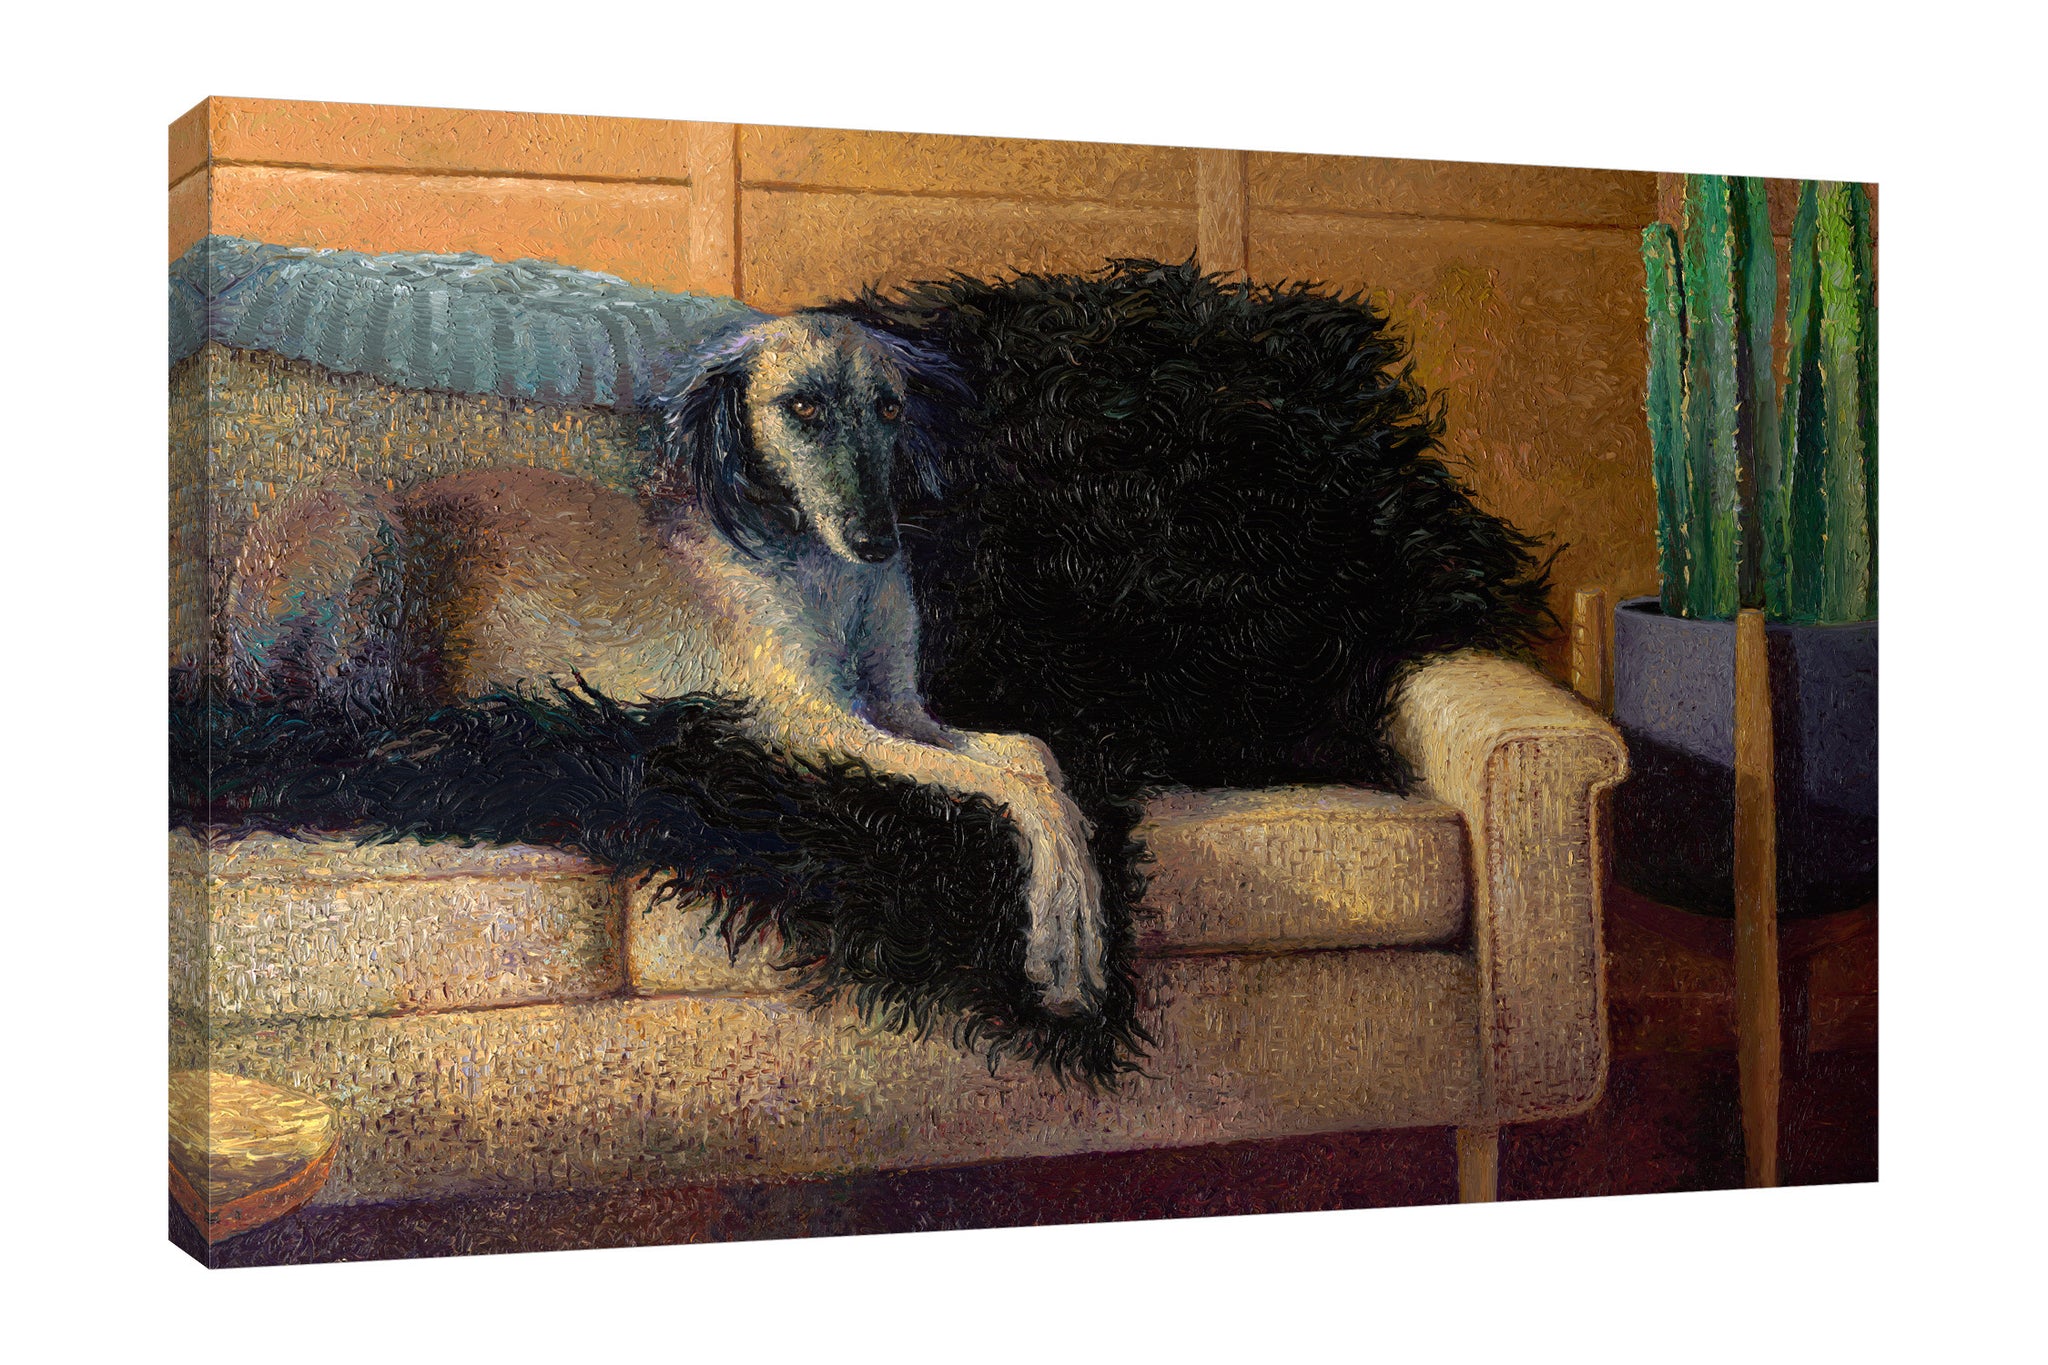 Iris-Scott,Modern & Contemporary,Animals,Impressionism,surreal,finger paint,animal,couch,cactus,dog,,